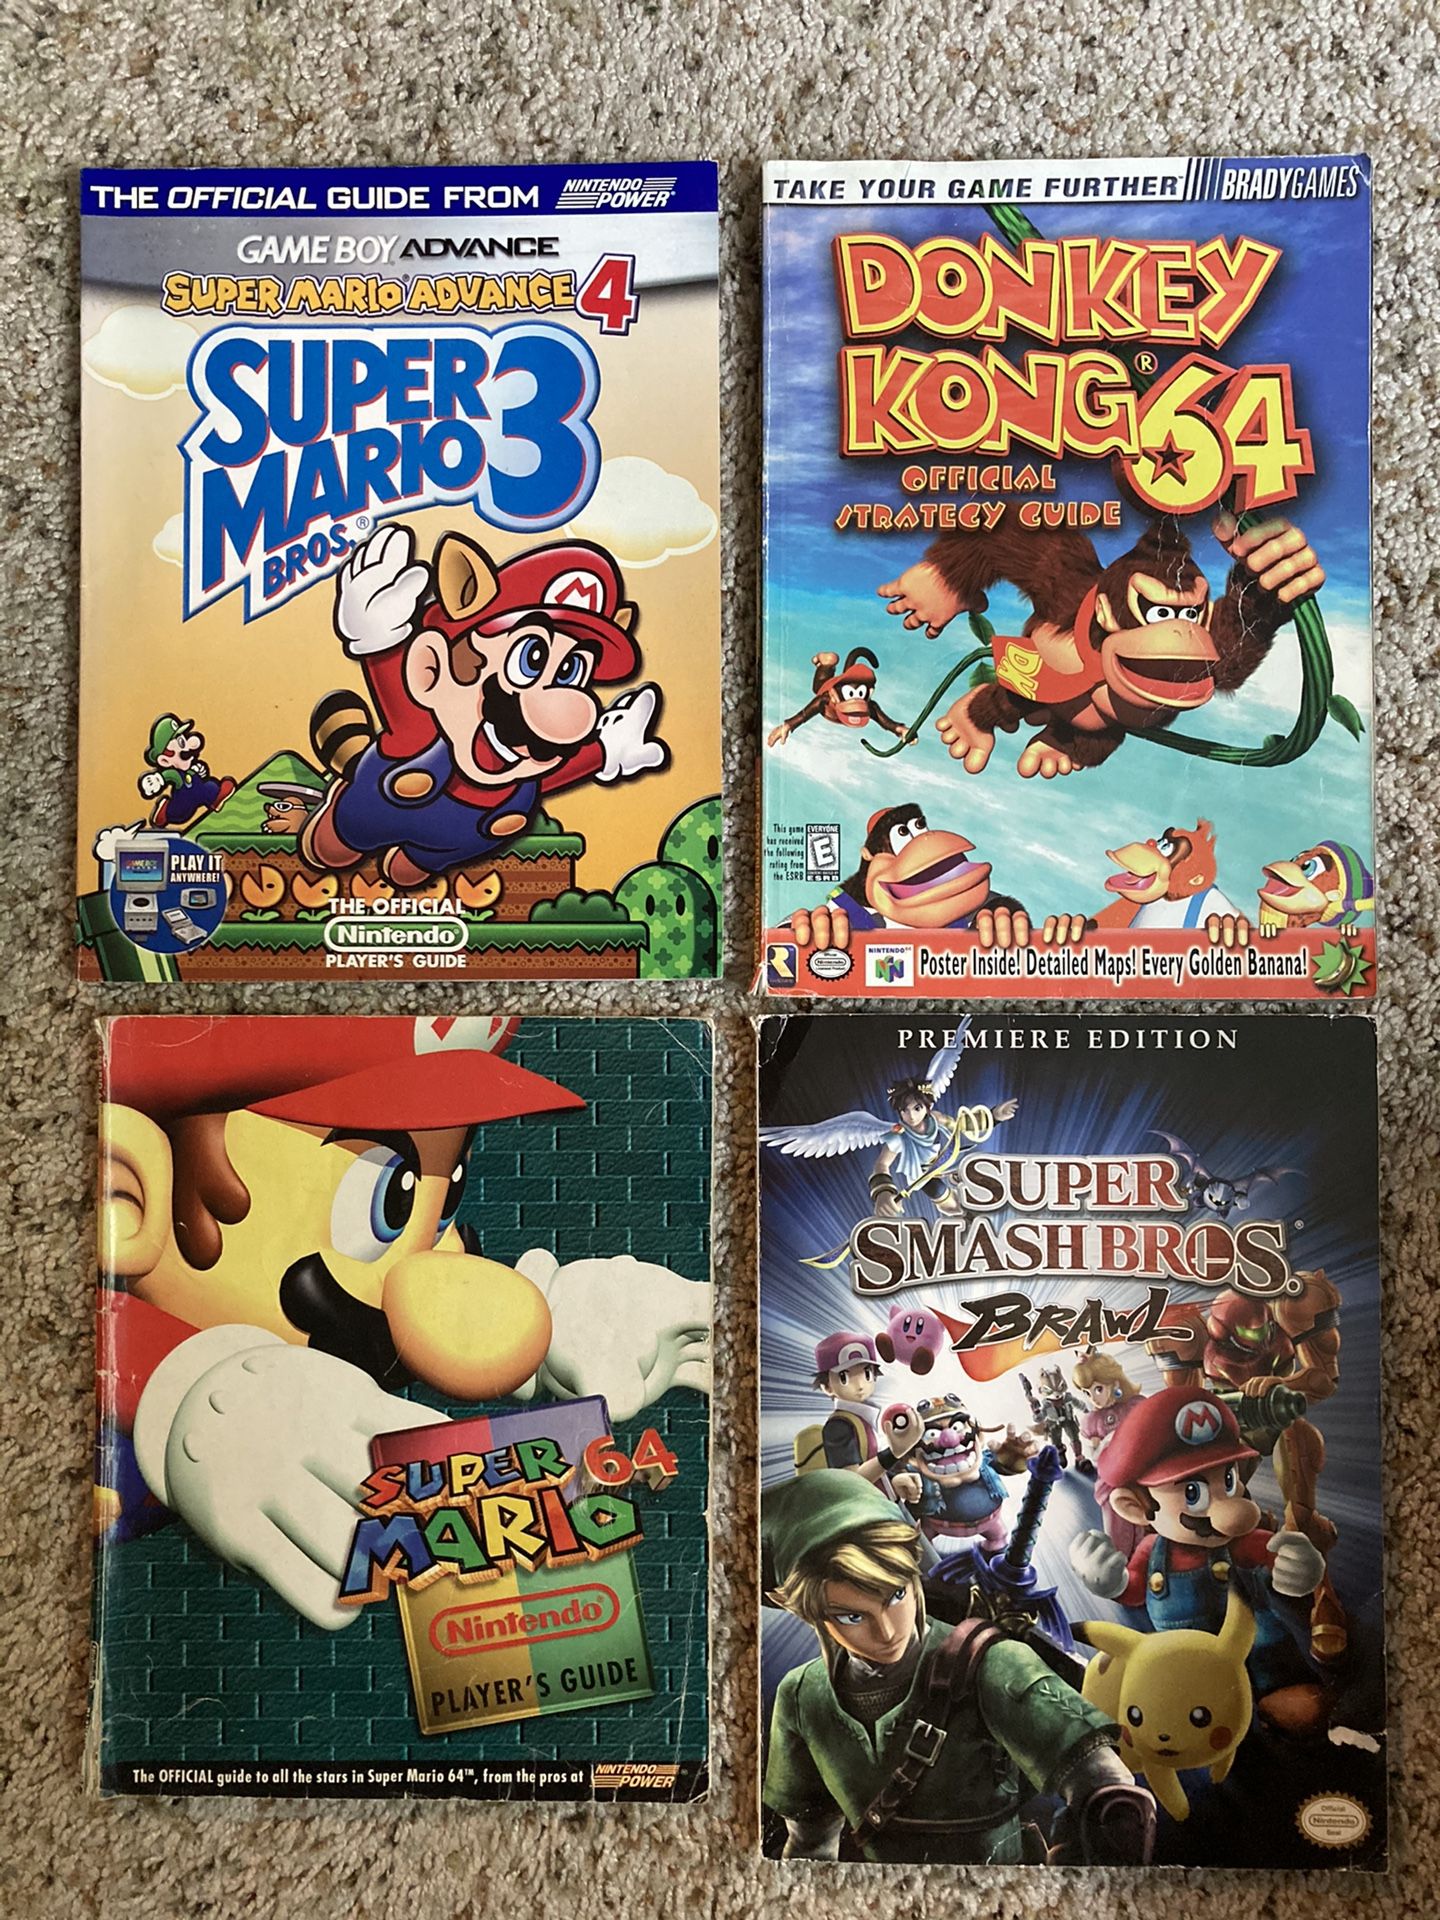 Nintendo Strategy Guides for Mario 64, Donkey Kong 64, Super Mario 3, and Smash Brawl